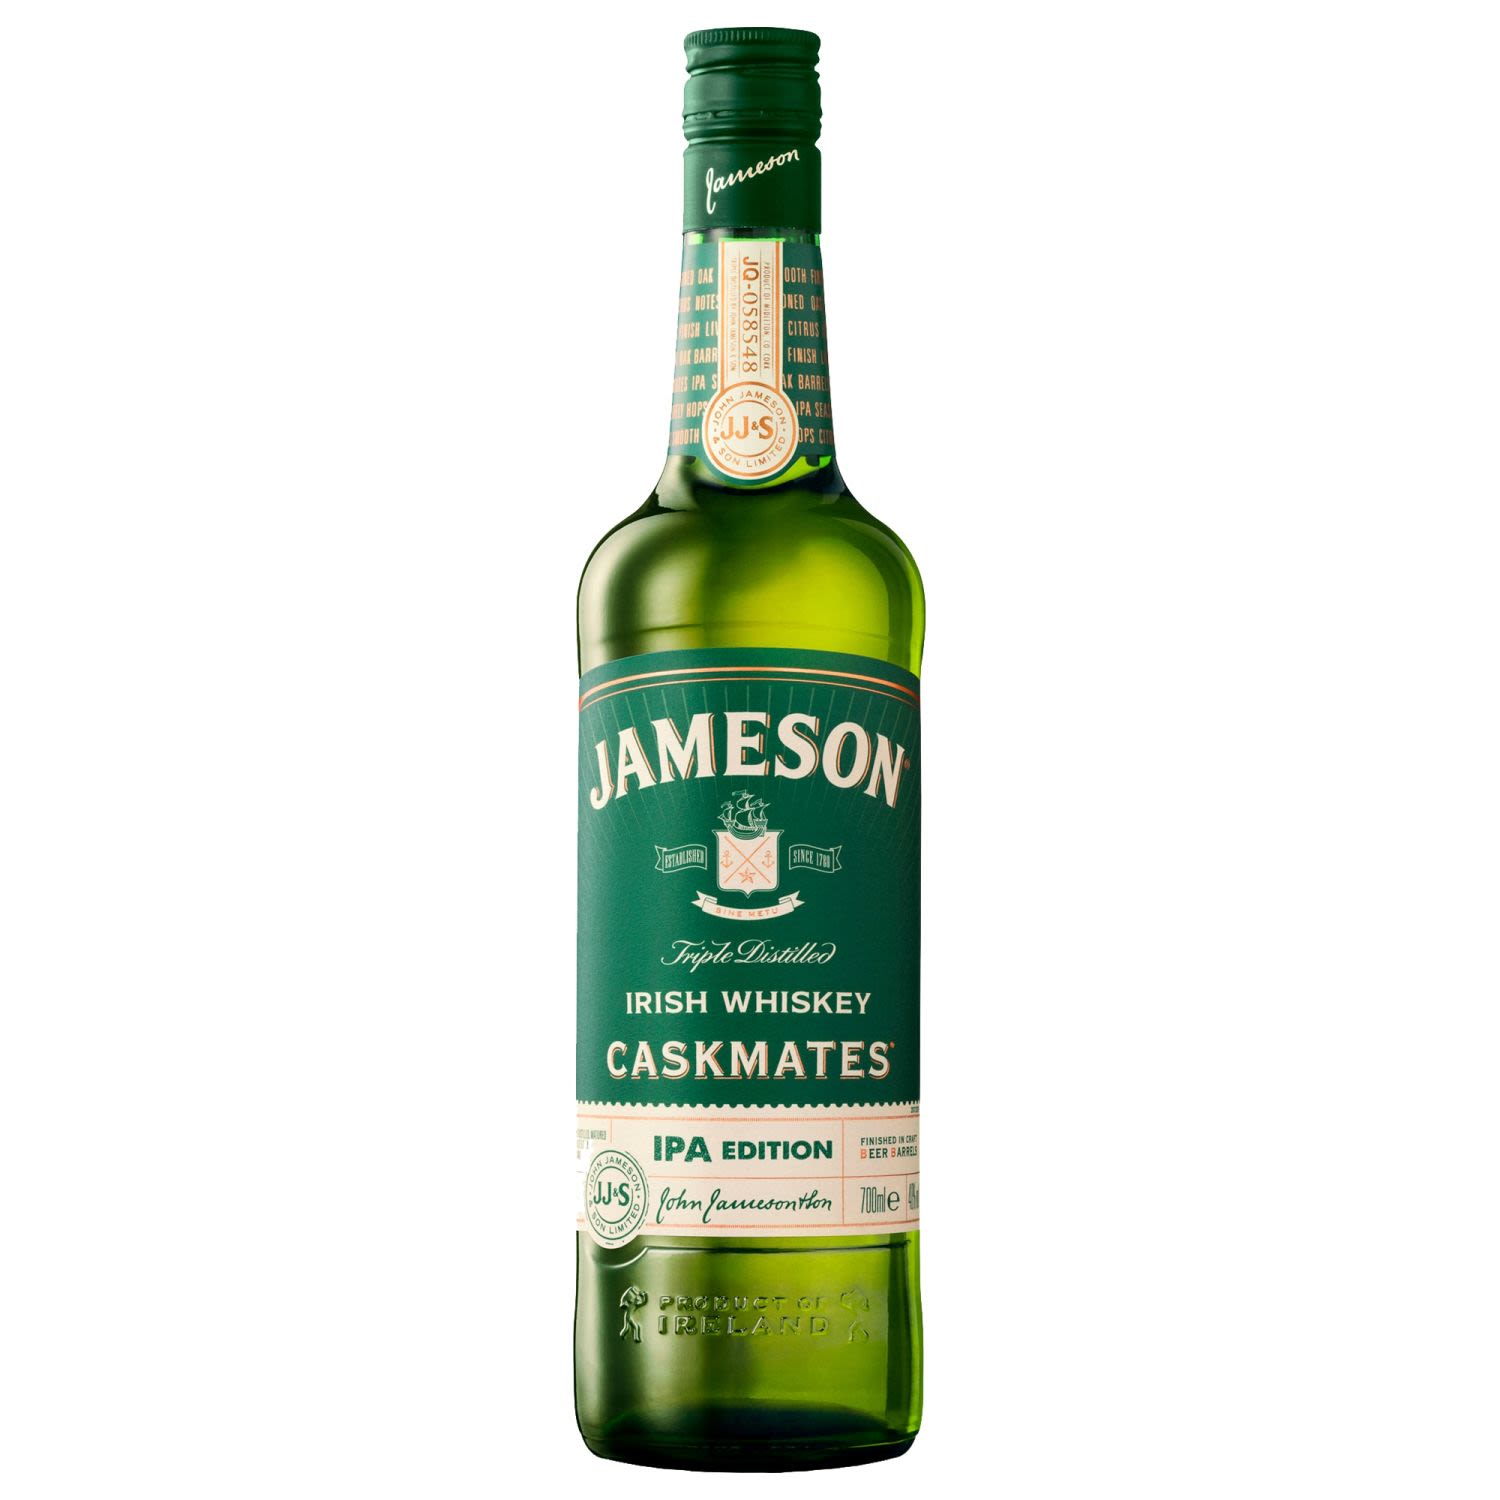 Jameson Caskmates IPA Edition Irish Whiskey 700mL Bottle